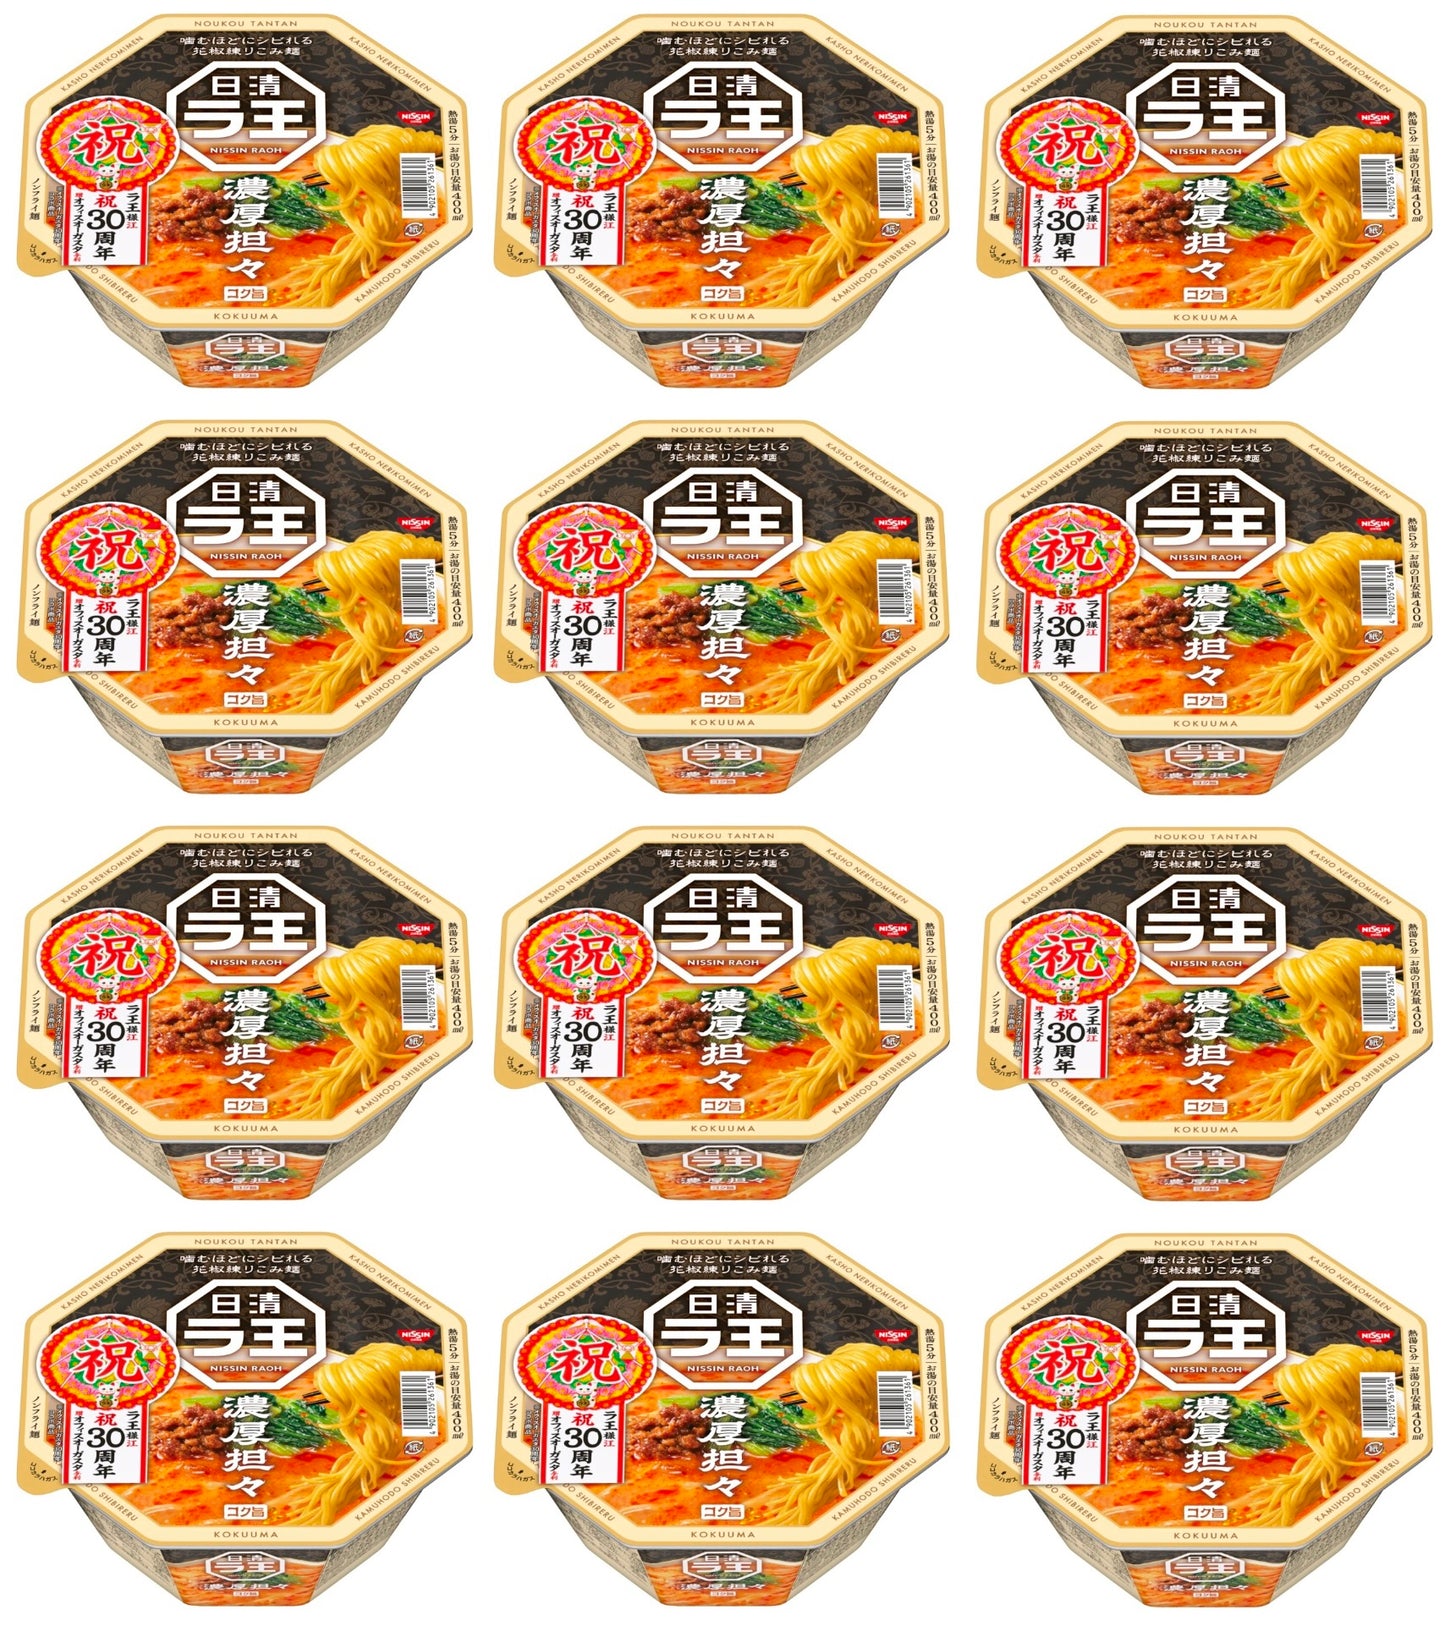 Nissin RAOH Noodles Ramen Dandan Spicy Pork Cup Soup Instant Food Japanese 128g